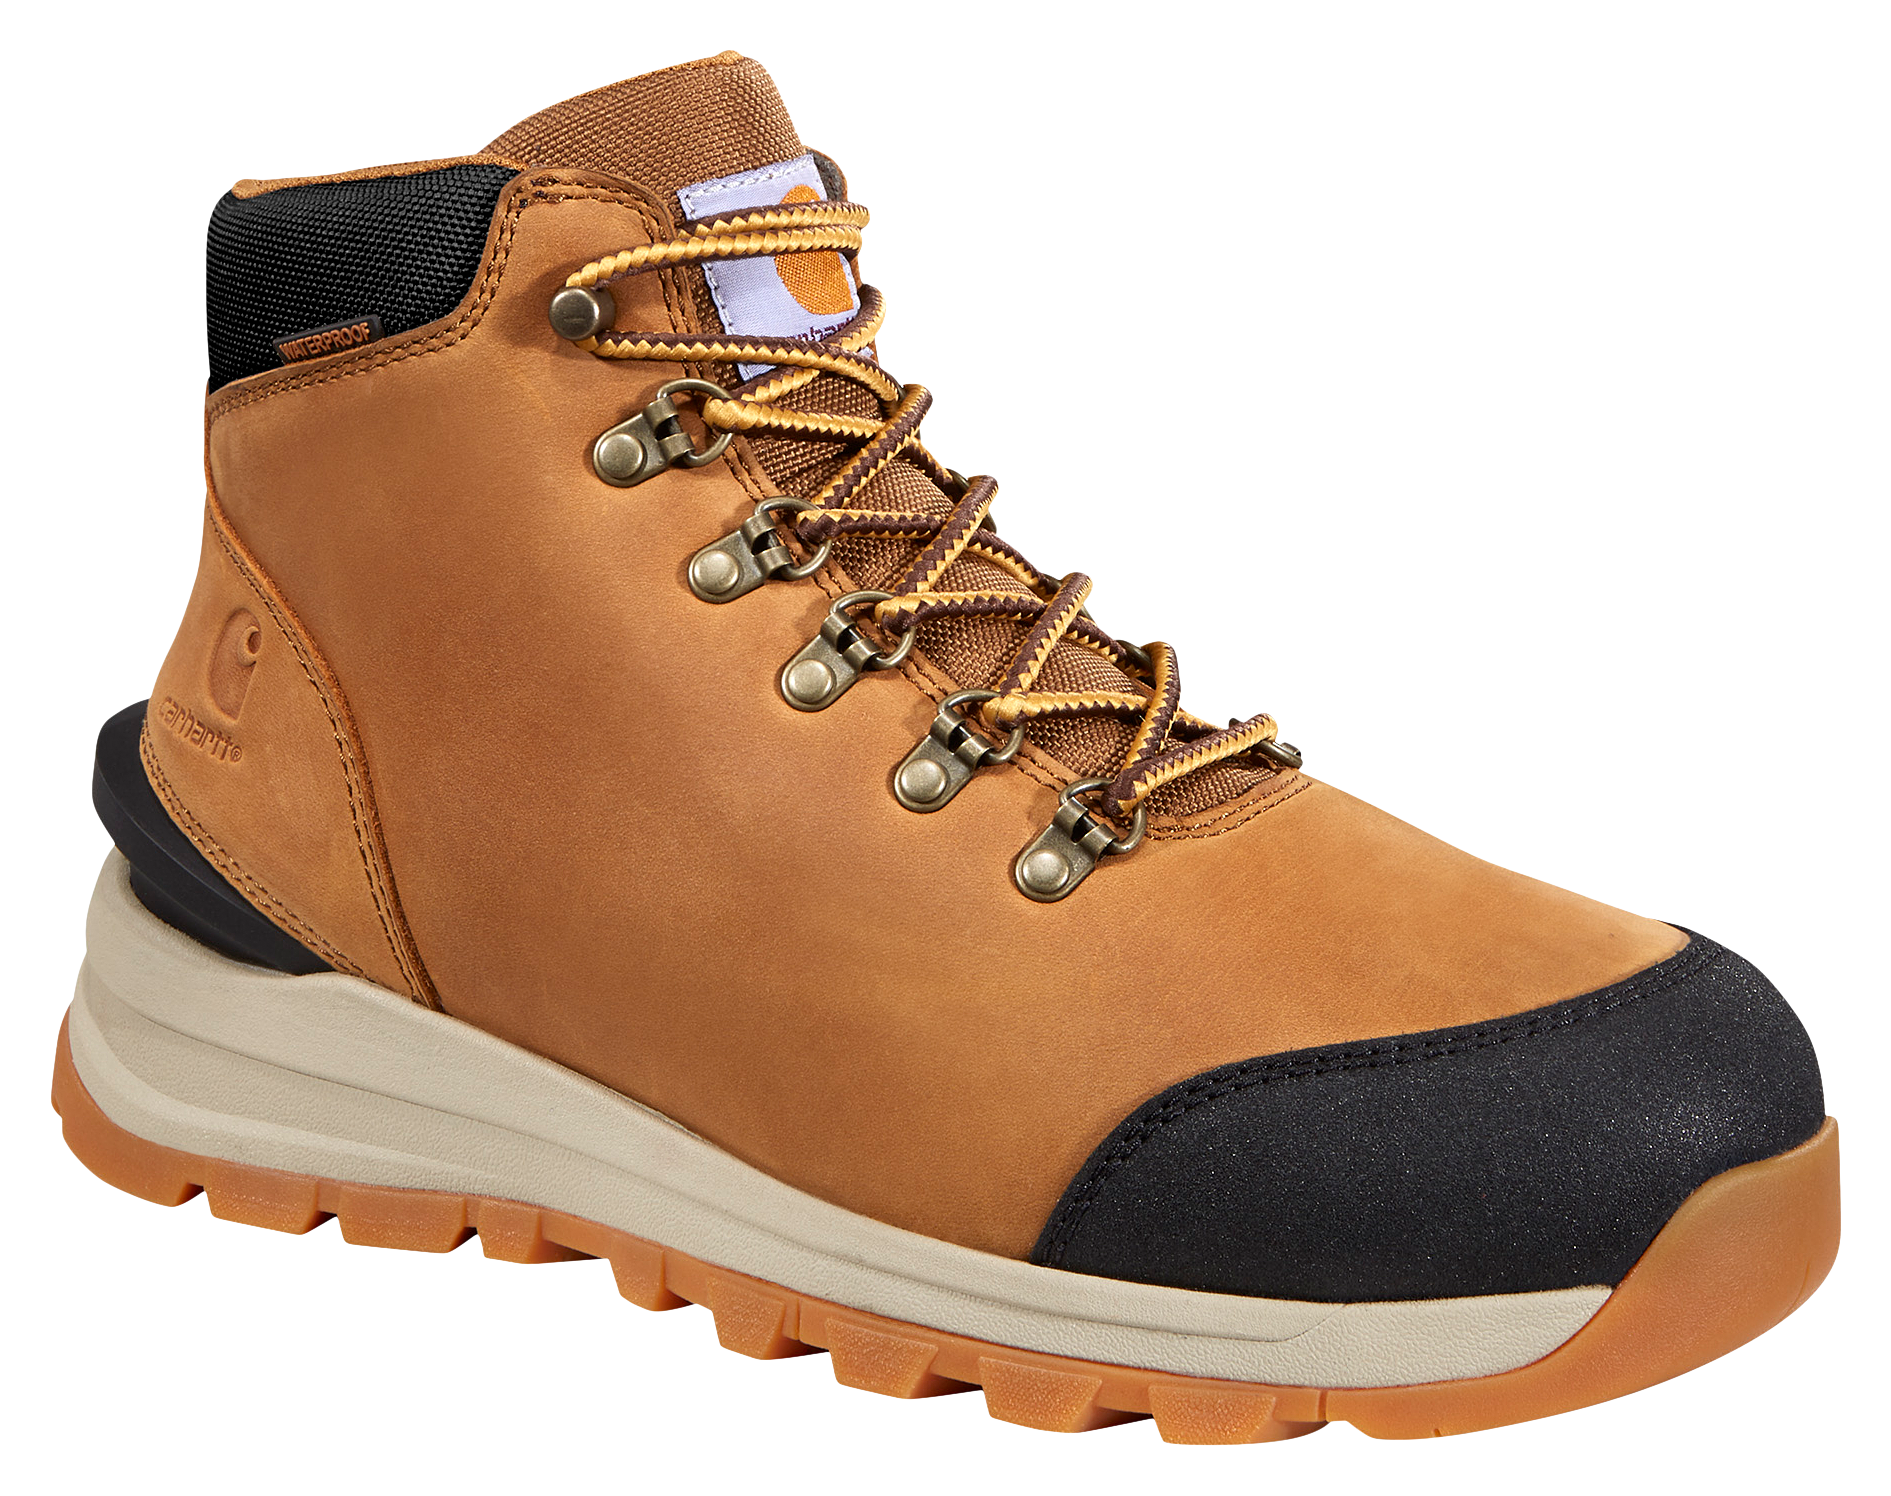 Carhartt Gilmore Waterproof Hiking Boots for Men - Brown - 14W